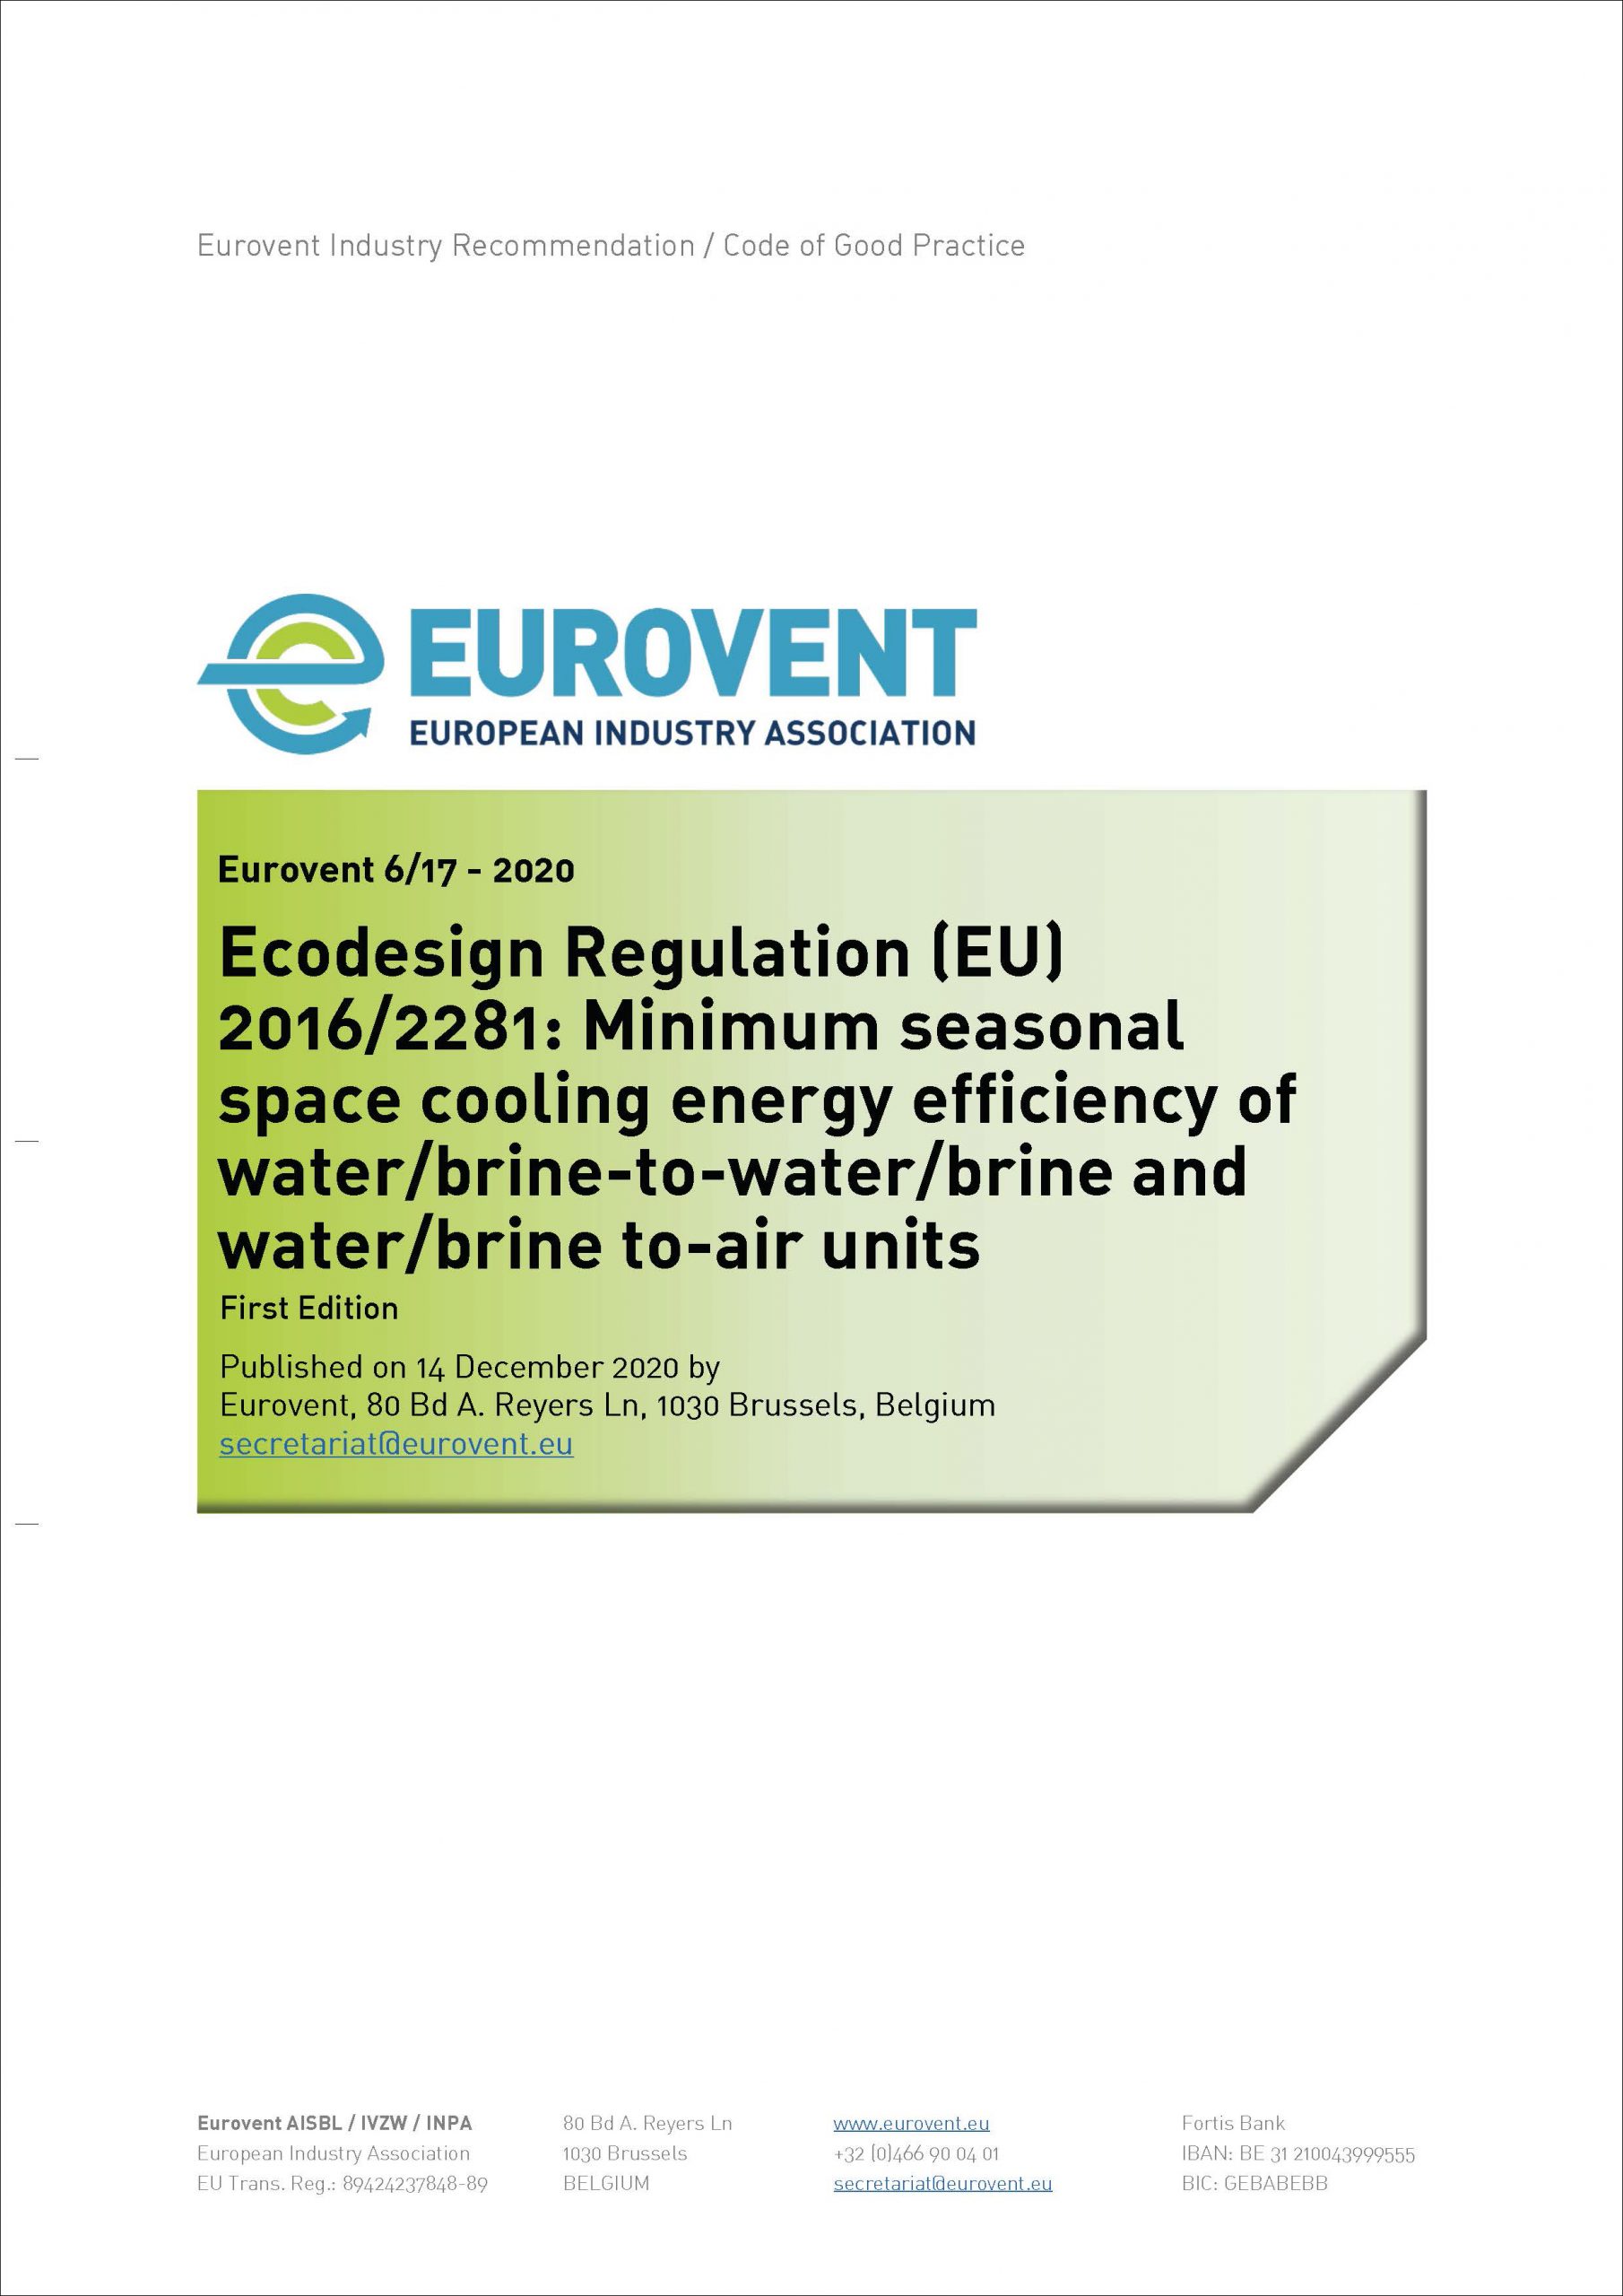 Eurovent REC 6-17 - Interpretation Ecodesign Regulation EU 2016 2281 - 2020 - EN.jpg